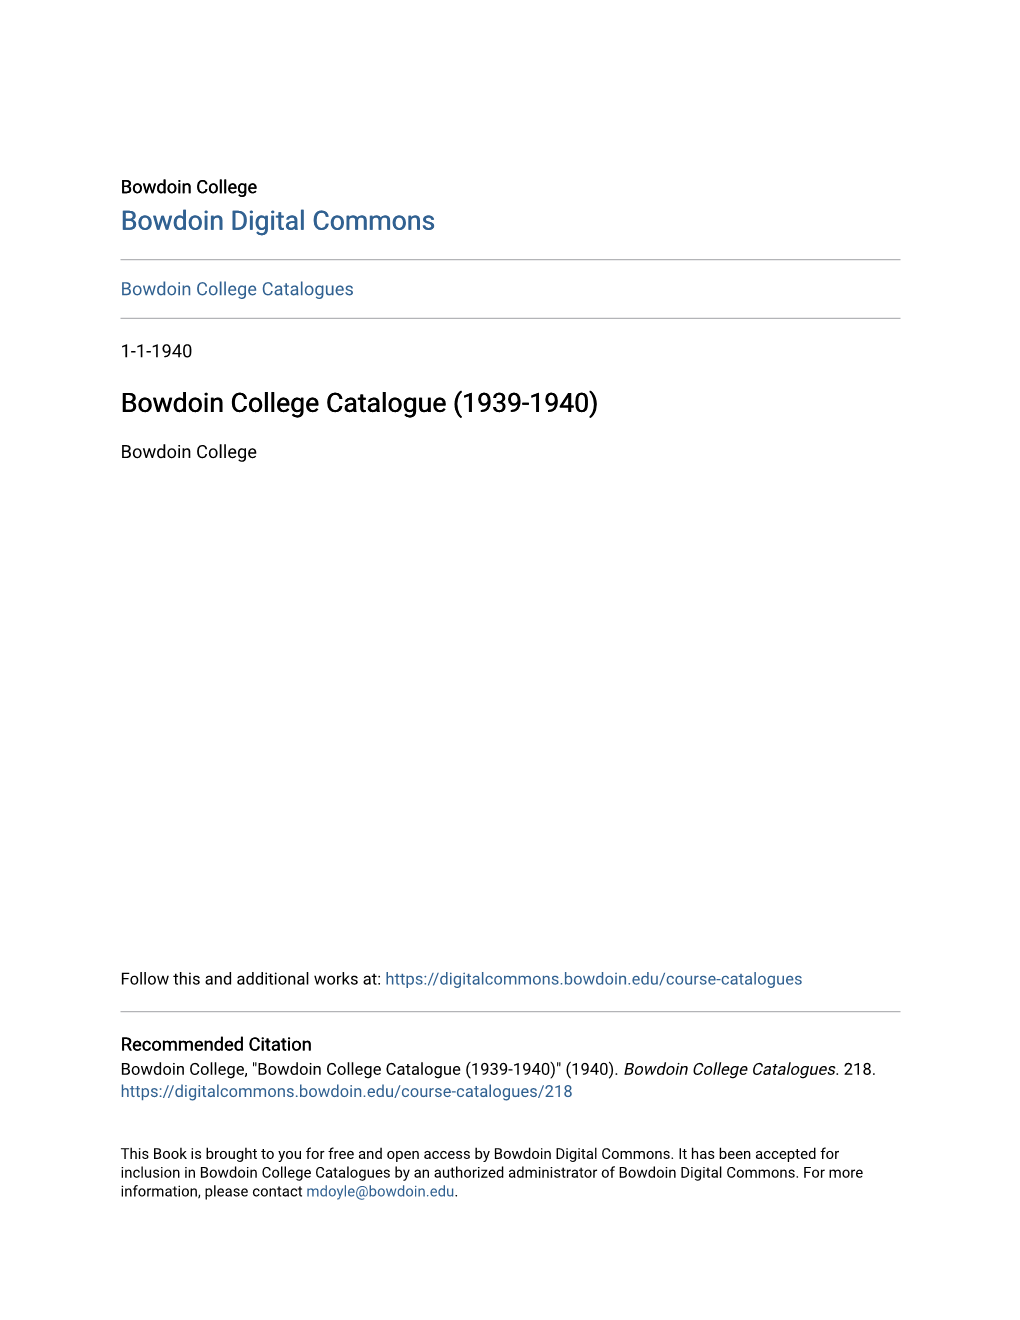 Bowdoin College Catalogue (1939-1940)